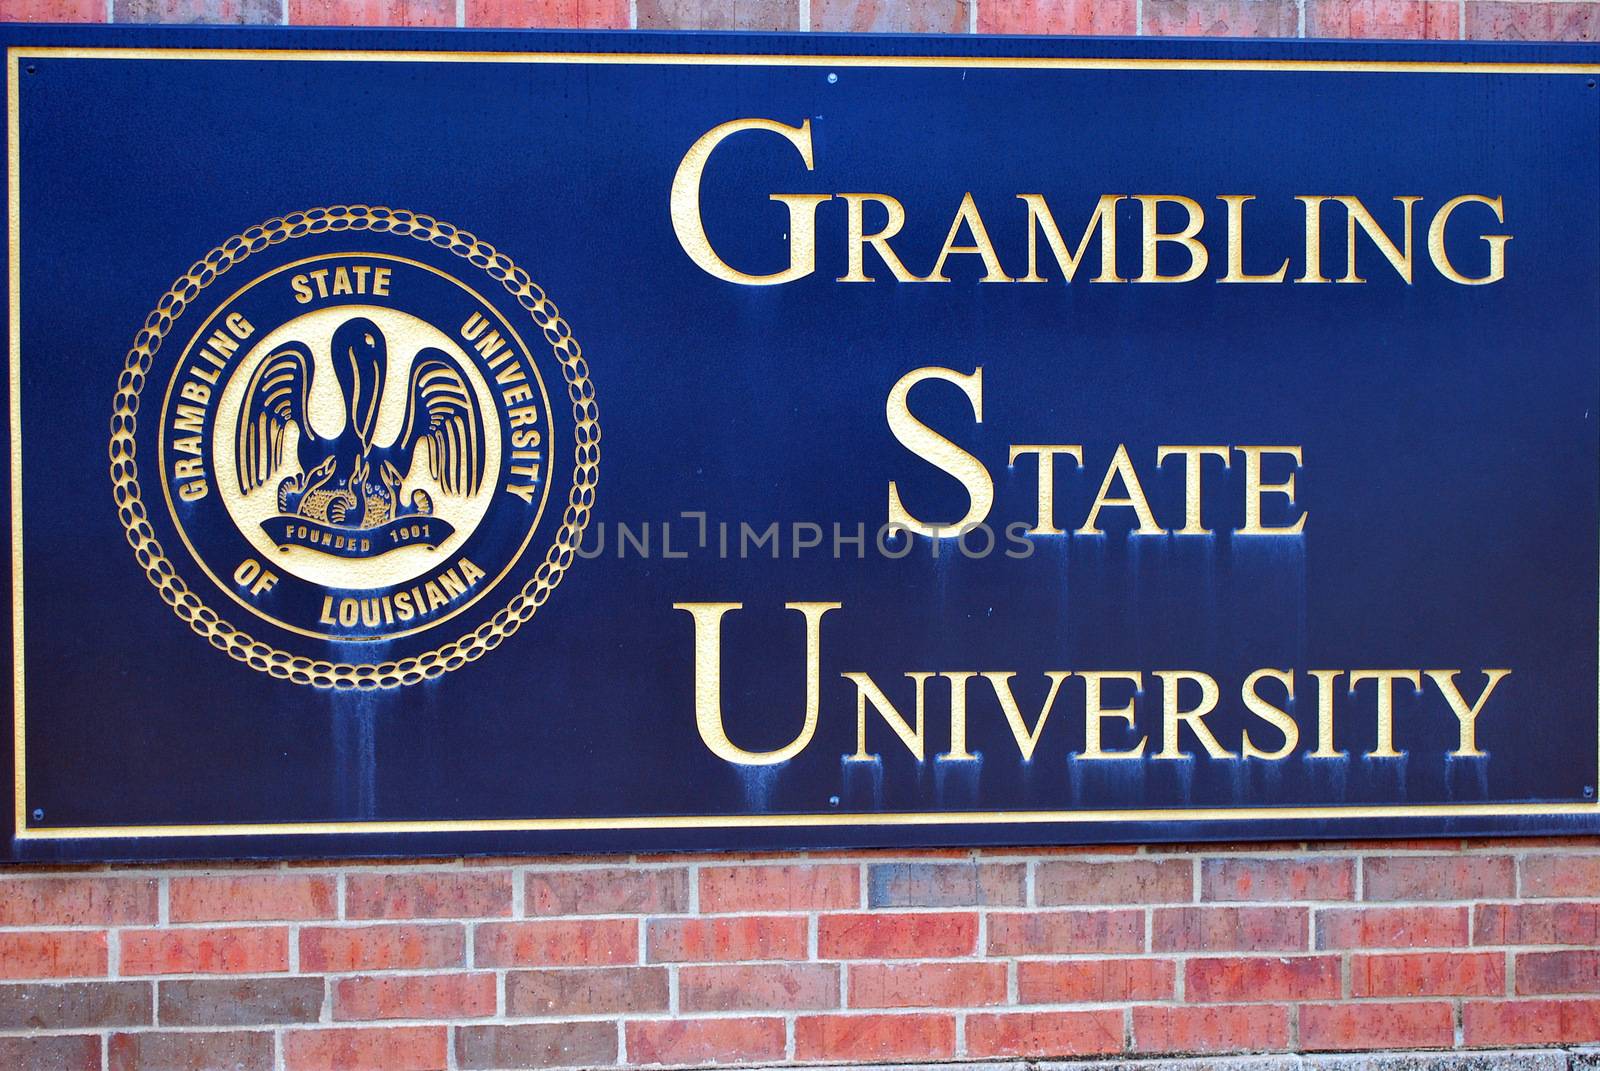 Grambling state University sign. by oscarcwilliams